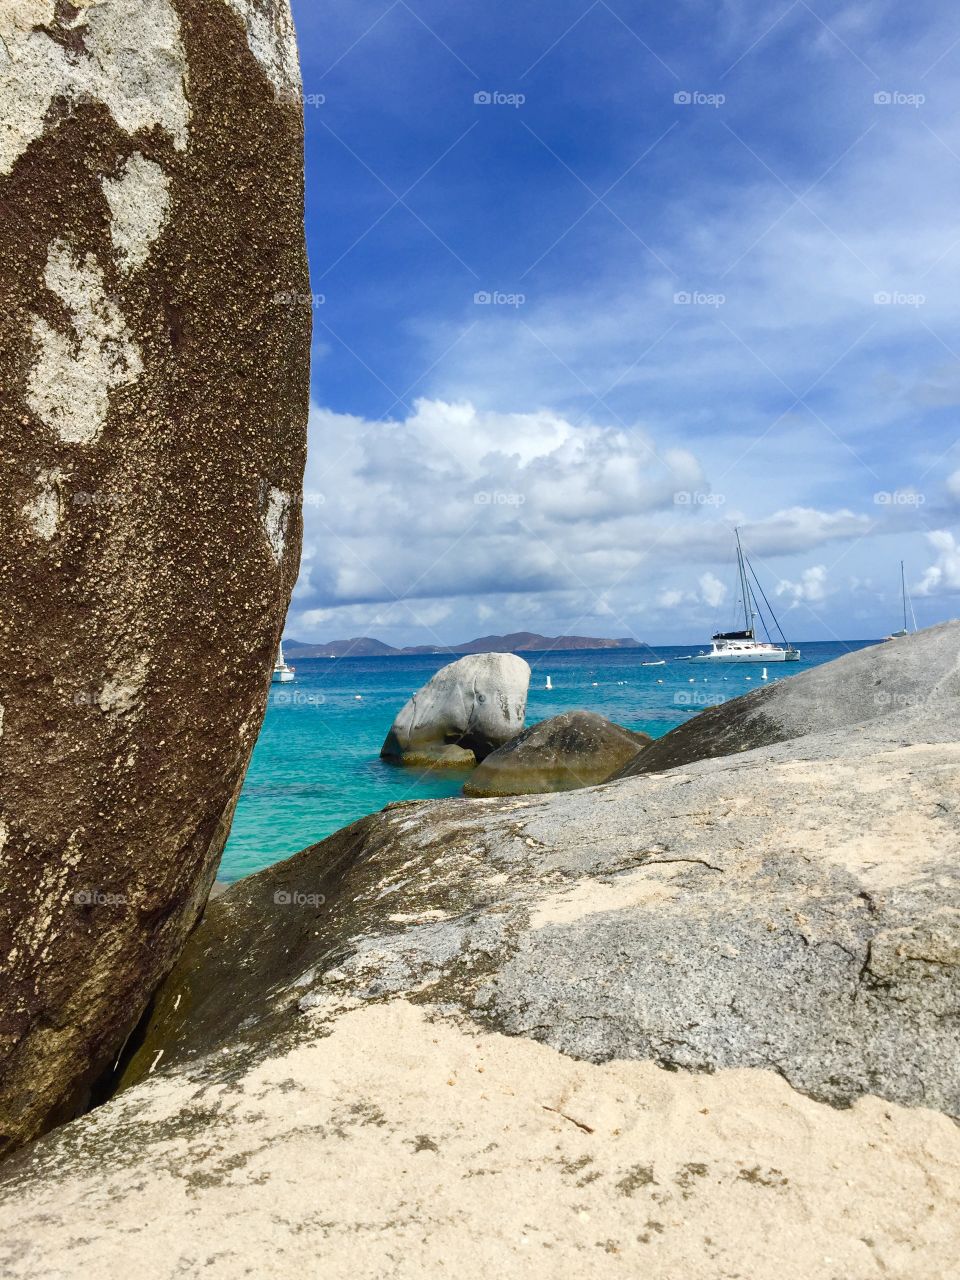 Rocks and beach of tortola island